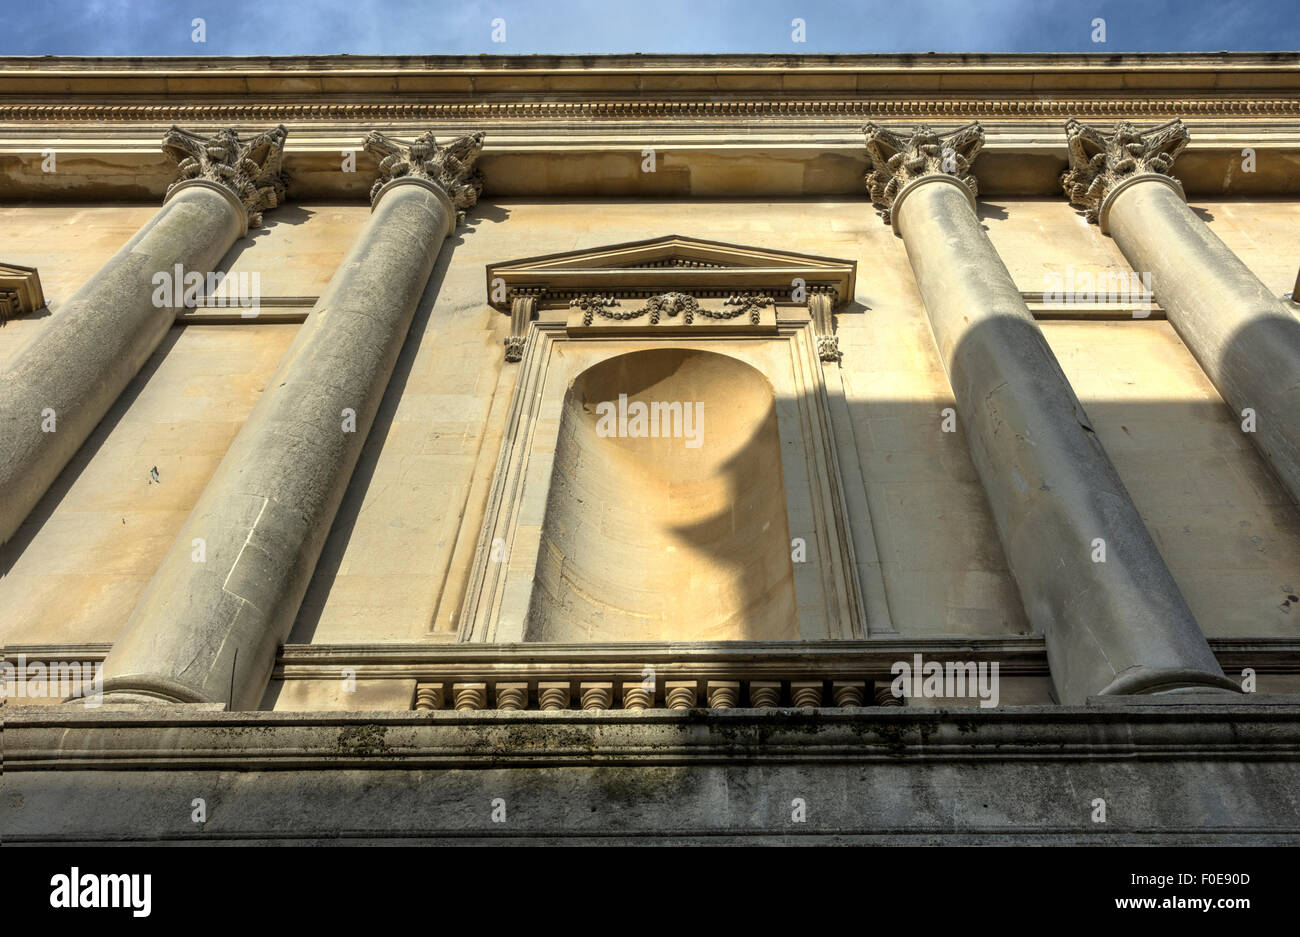 City of Bath, England  architecture of Bath columns. Classical columns. Stock Photo